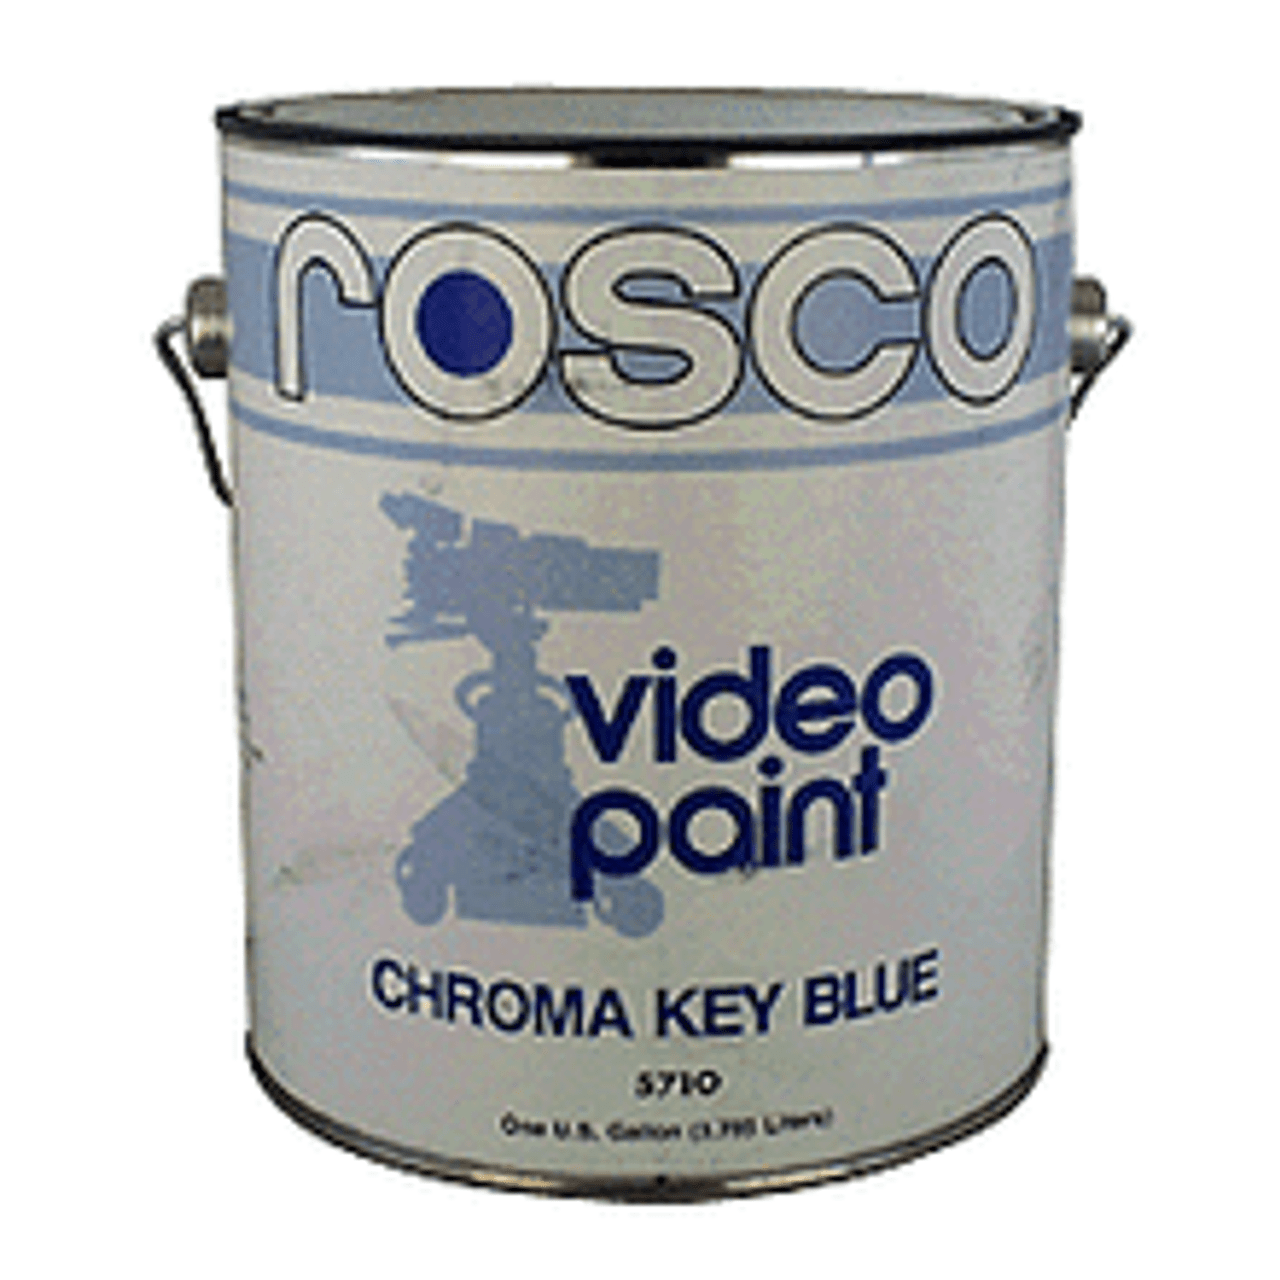 Rosco Chroma Key BLUE Gallon,  Video Paint